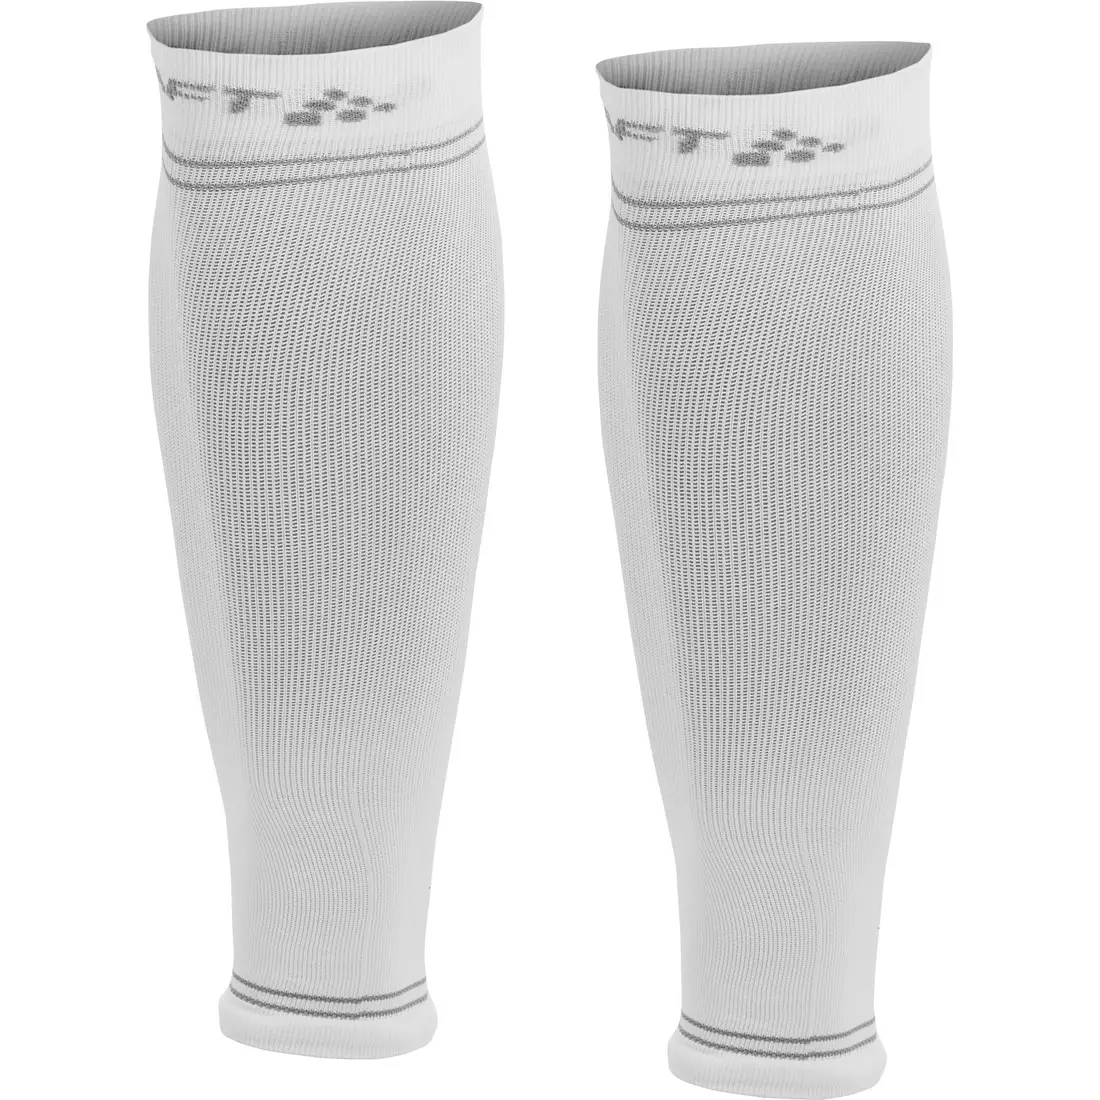 CRAFT BODY CONTROL CALVES calf compression sleeves 1902627-2900